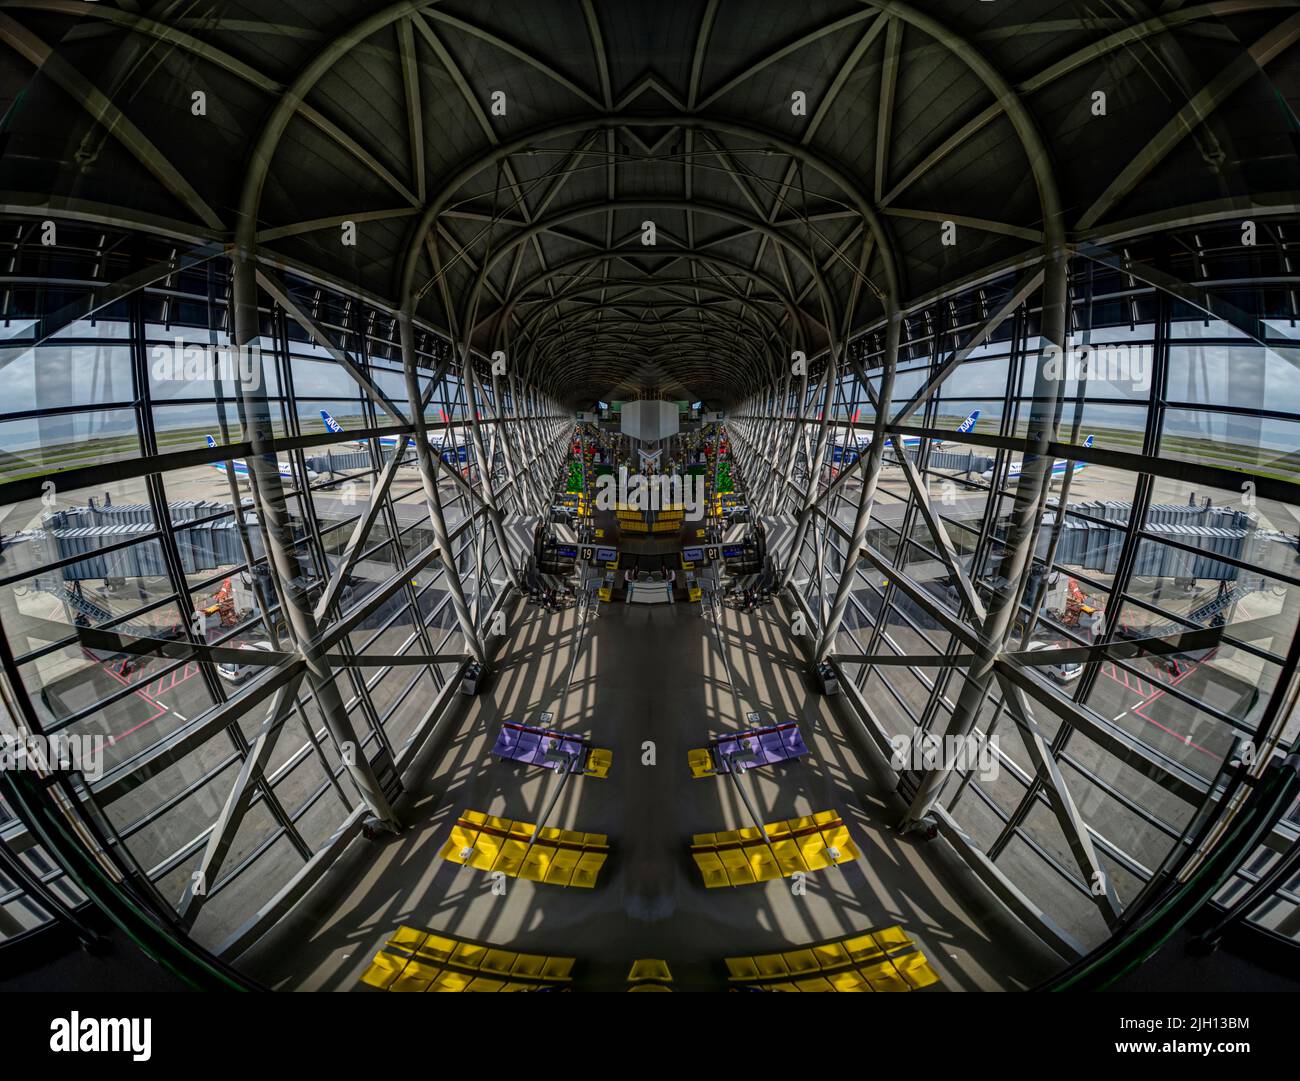 Fantasy mirrored image of Osaka airport terminal, Japan. Stock Photo